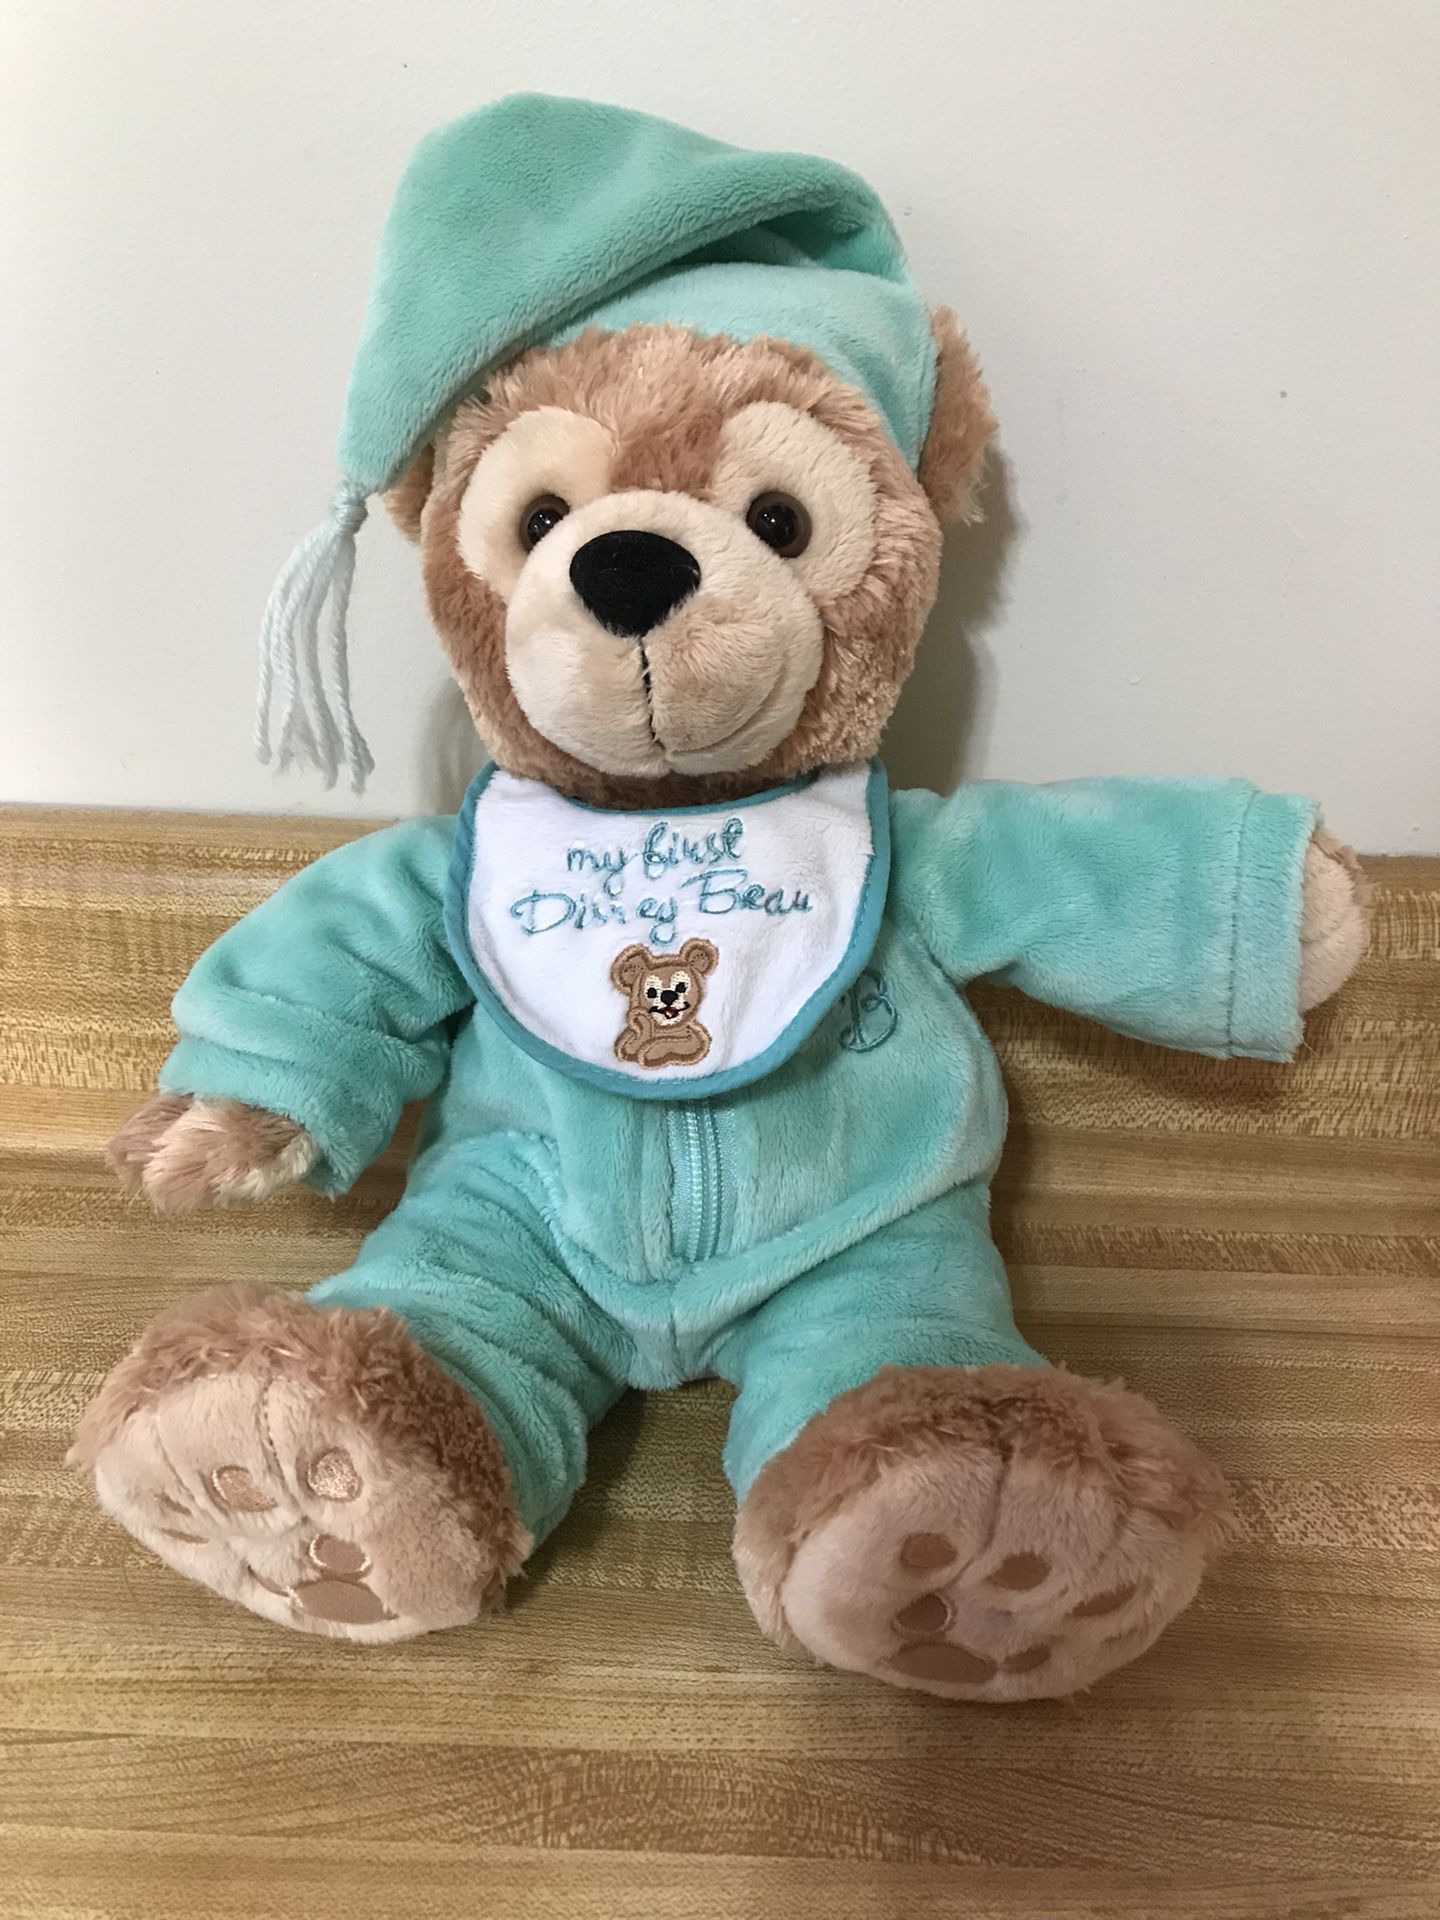 My first Disney Duffy stuffed bear nightgown plush